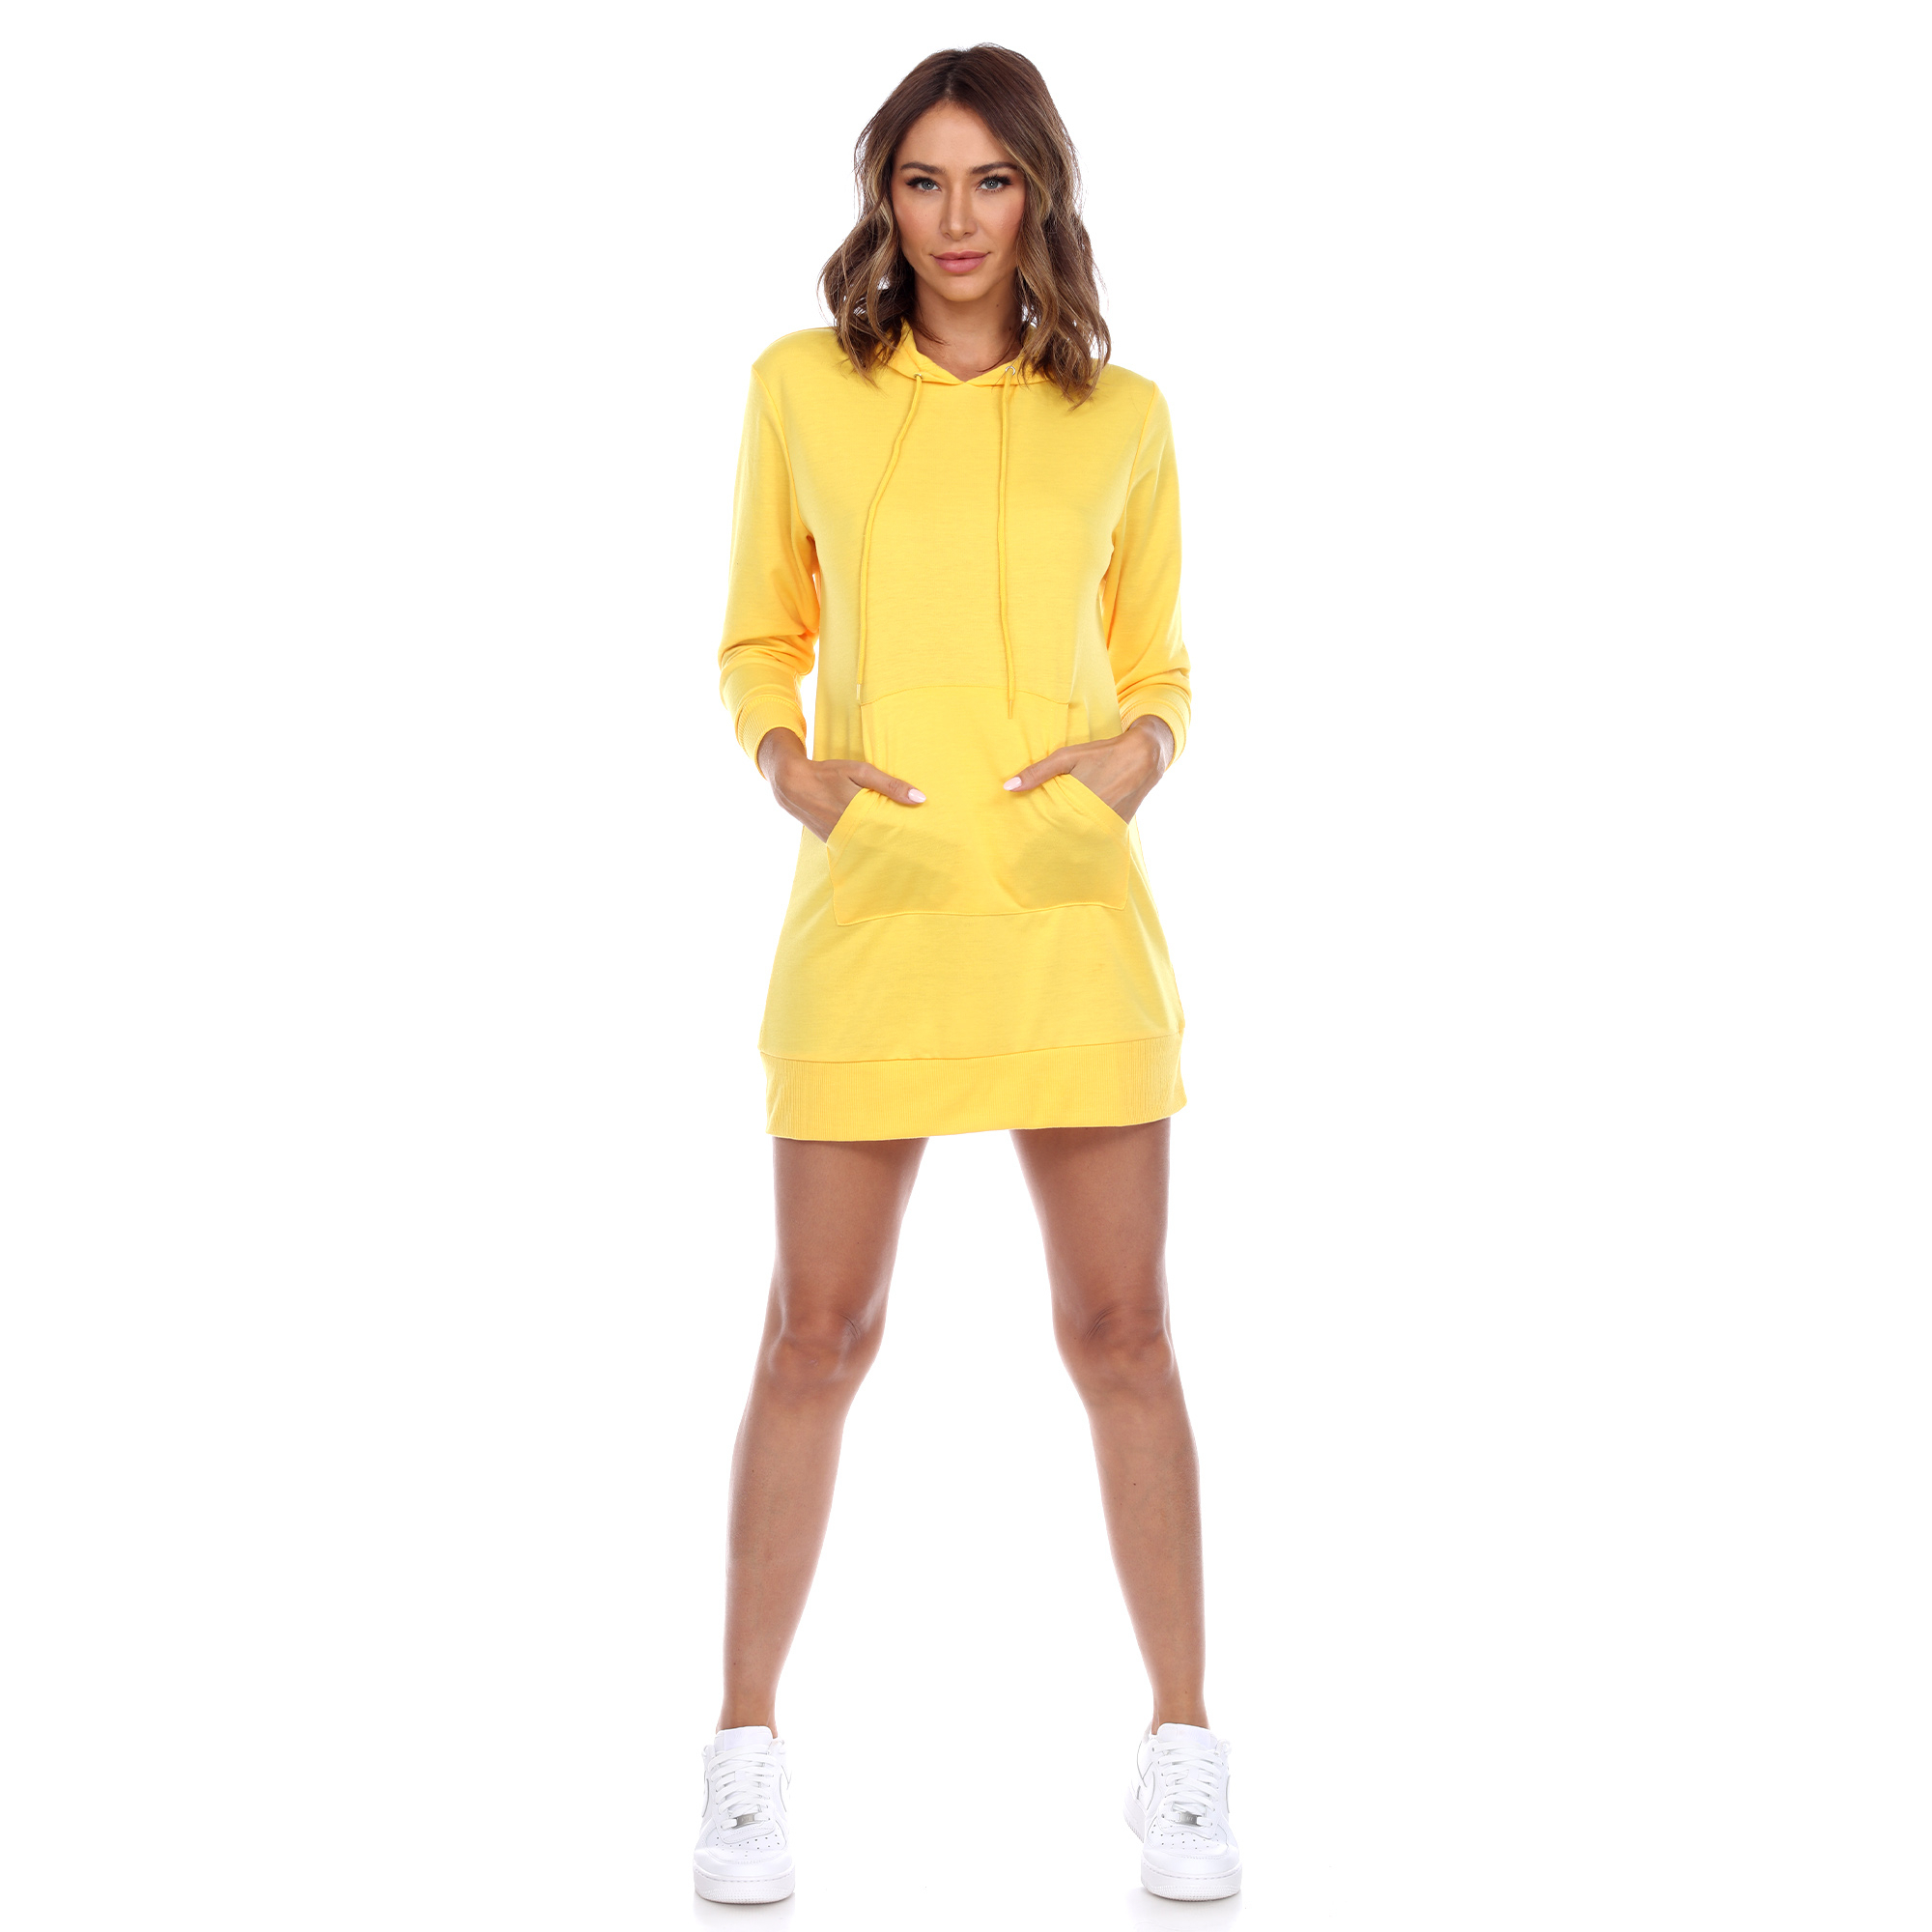 White Mark Womenâs Hoodie Sweatshirt Dress - Yellow, Large